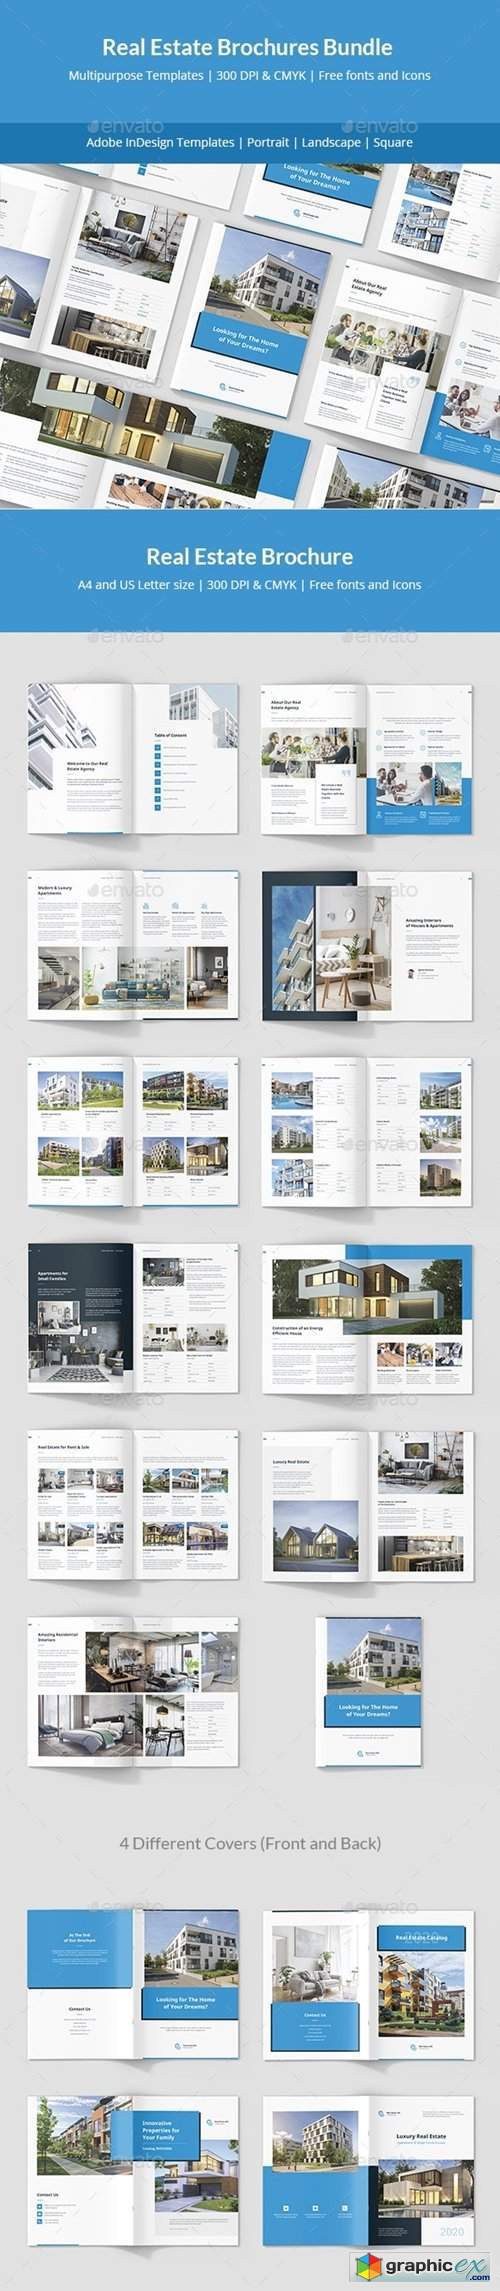 Real Estate Brochures Bundle Print Templates